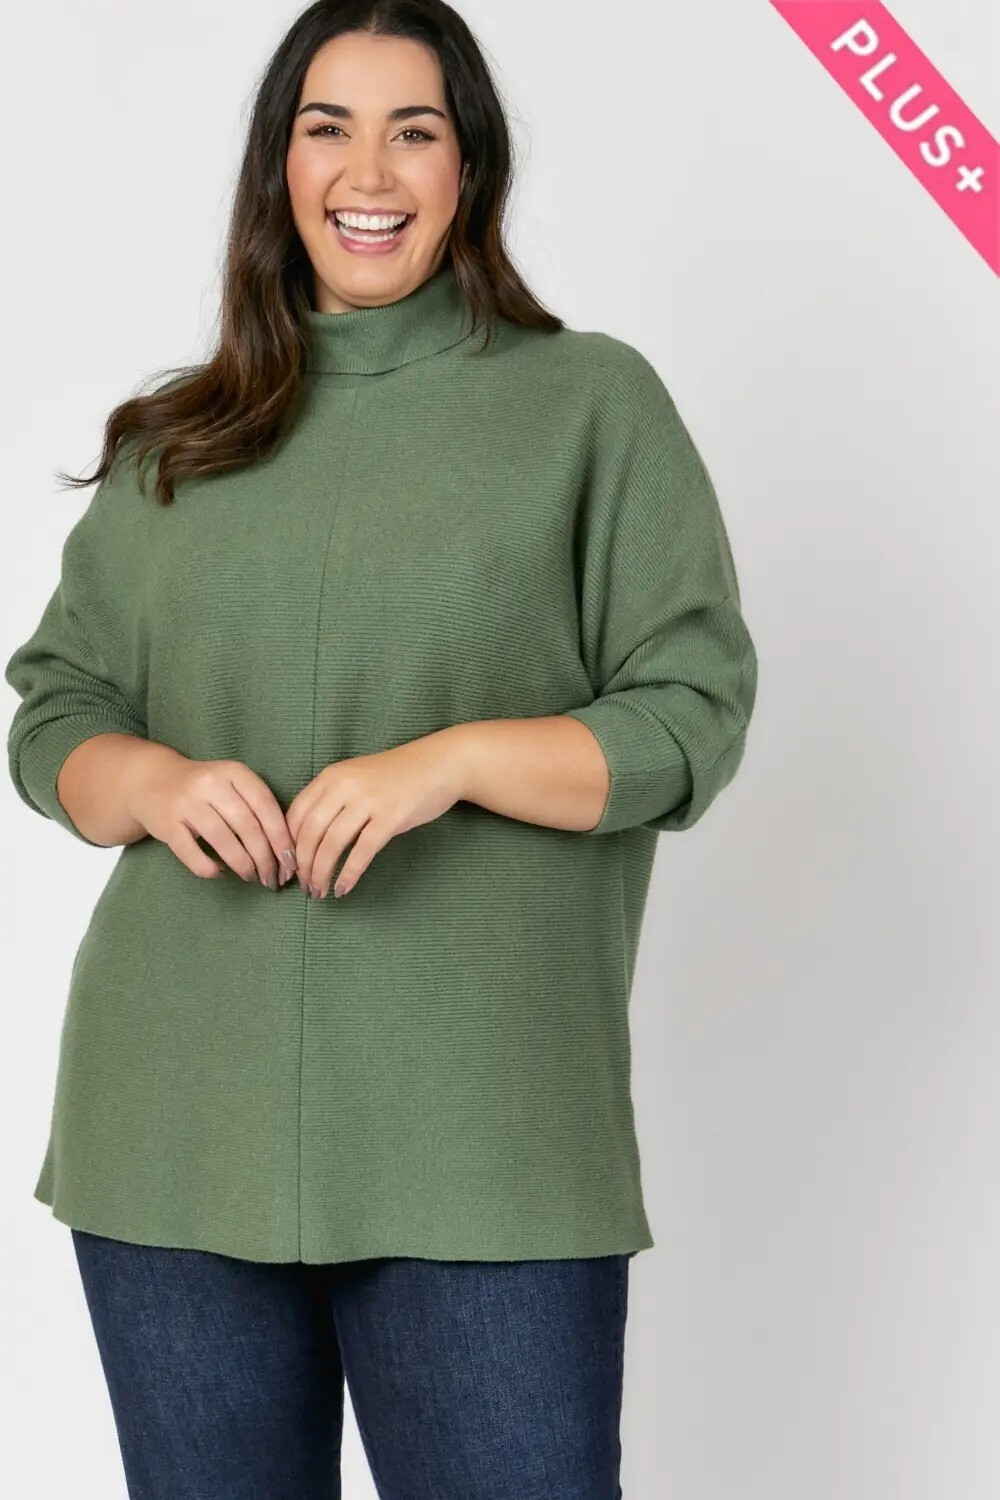 Olive Sweater Plus